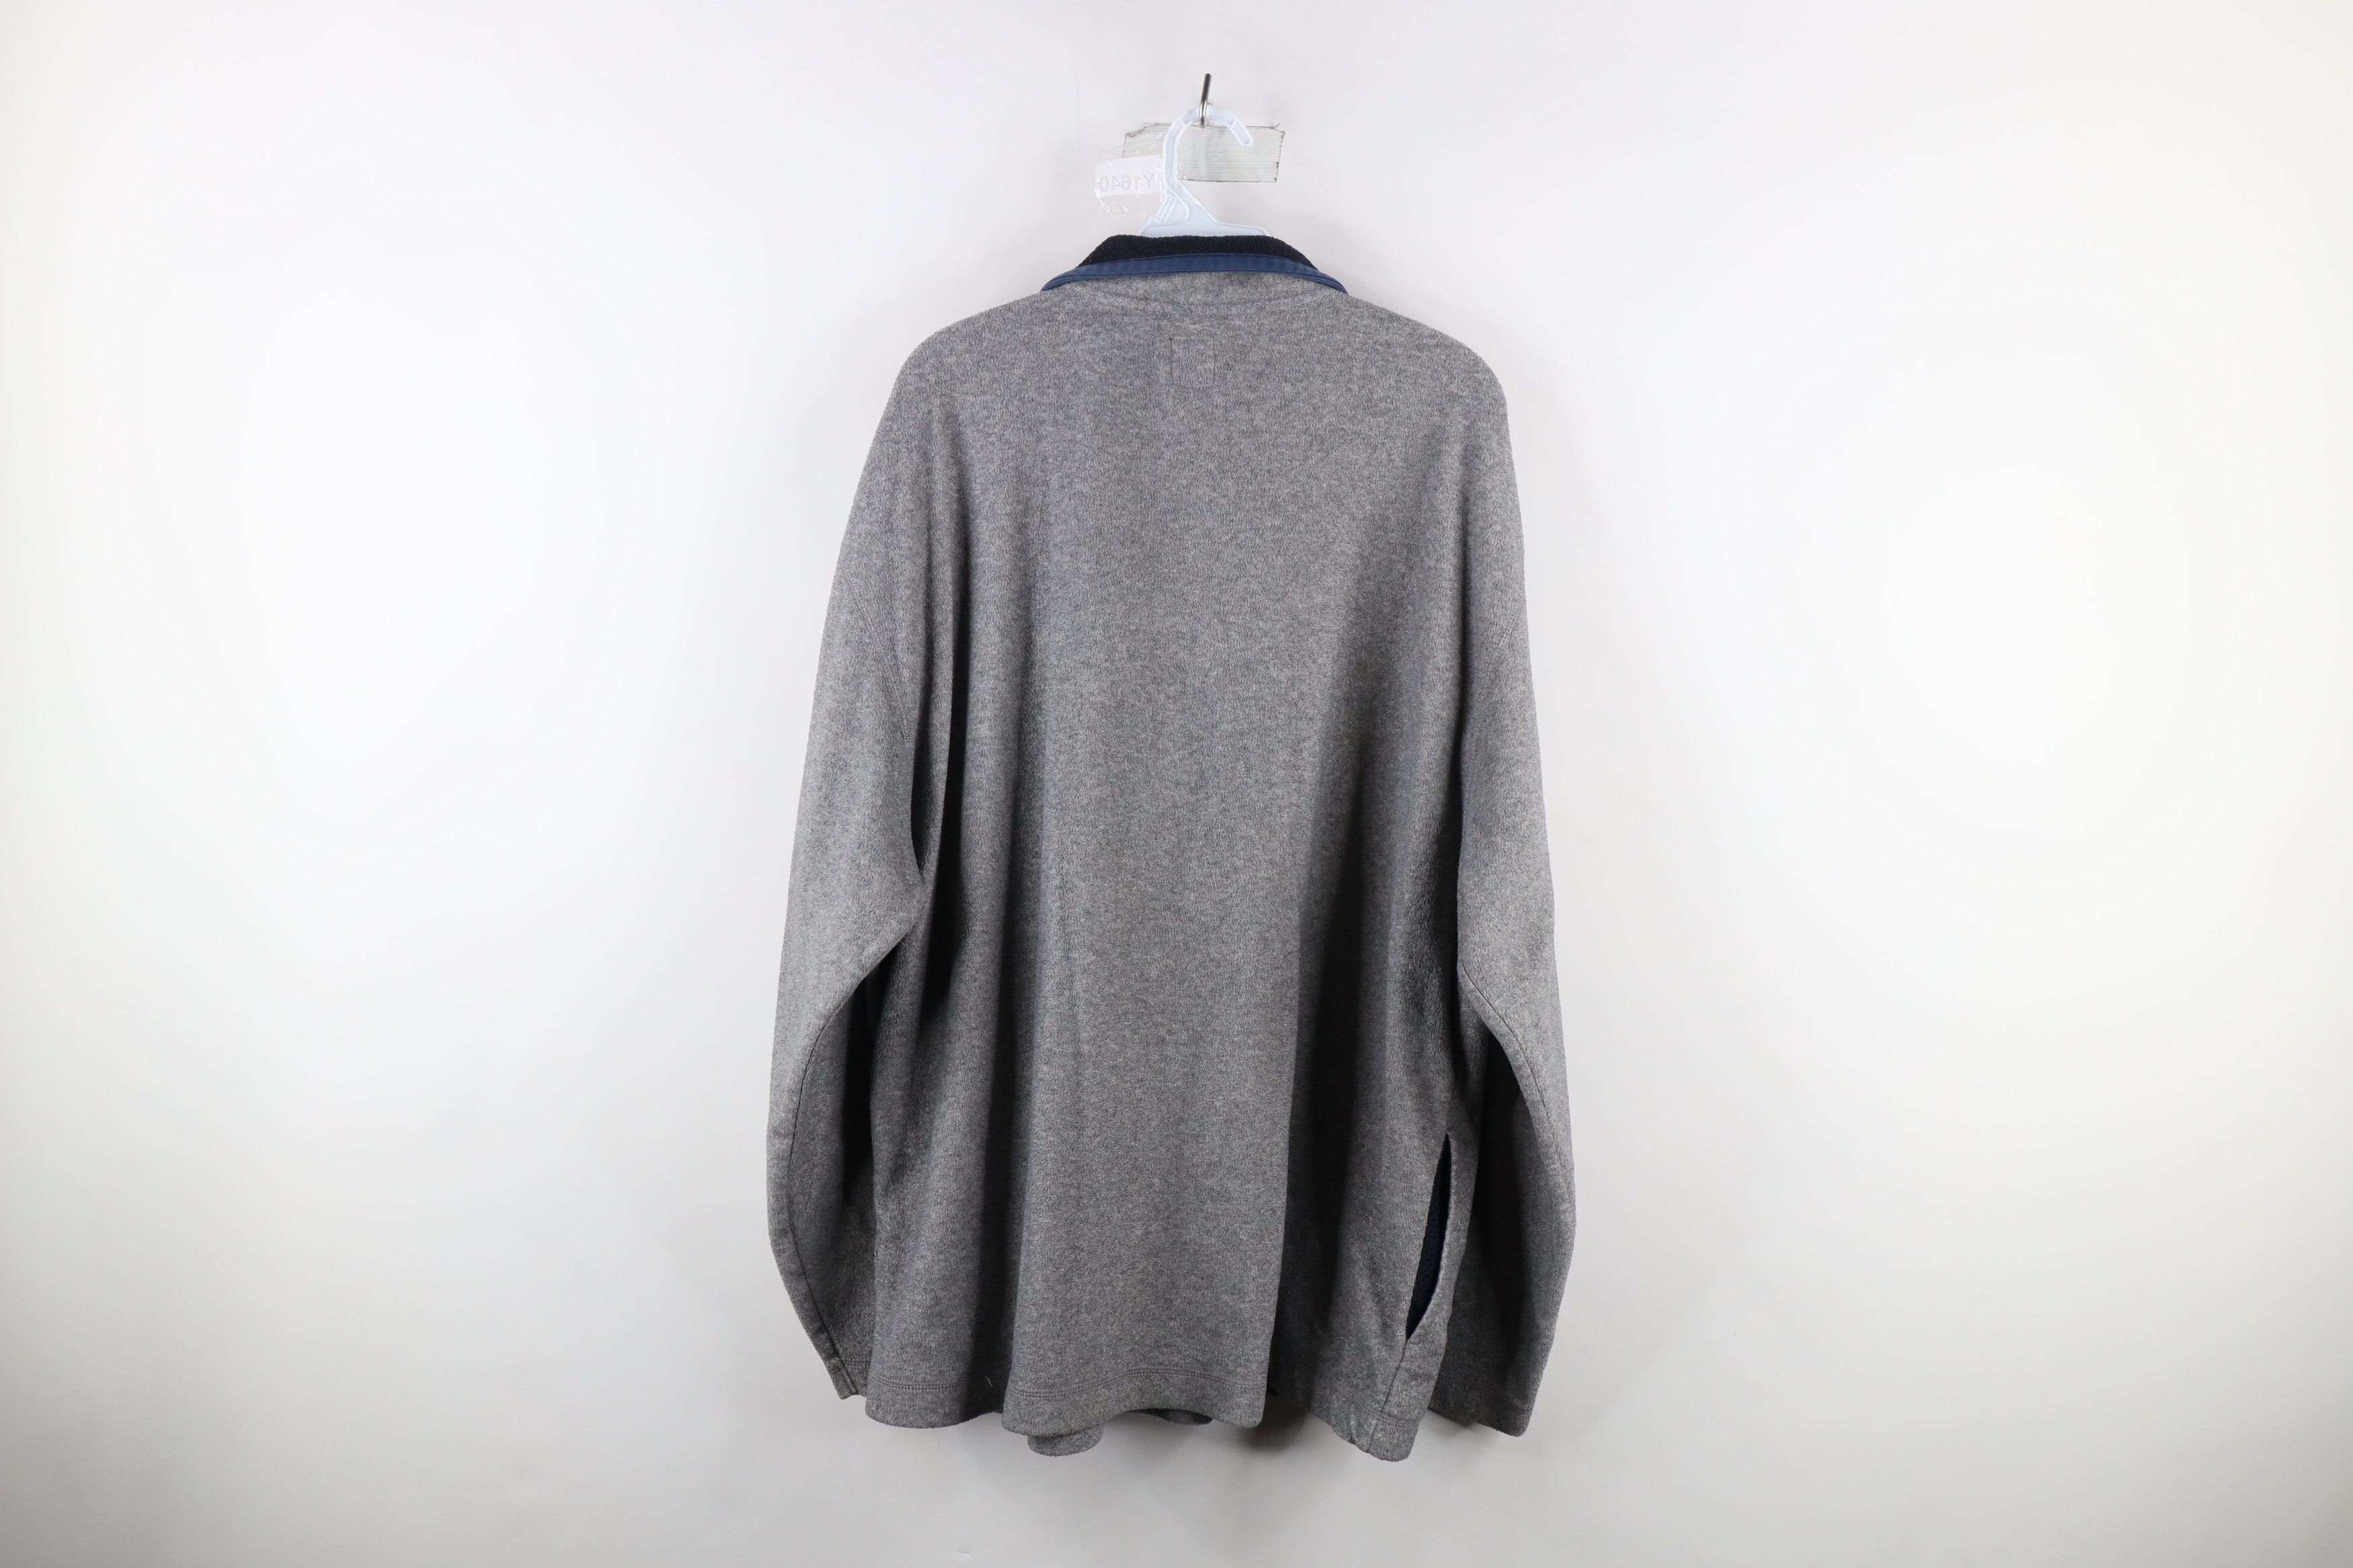 Vintage Vintage 90s Gap Athletic Half Zip Fleece Pullover Sweater Size US XL / EU 56 / 4 - 7 Thumbnail